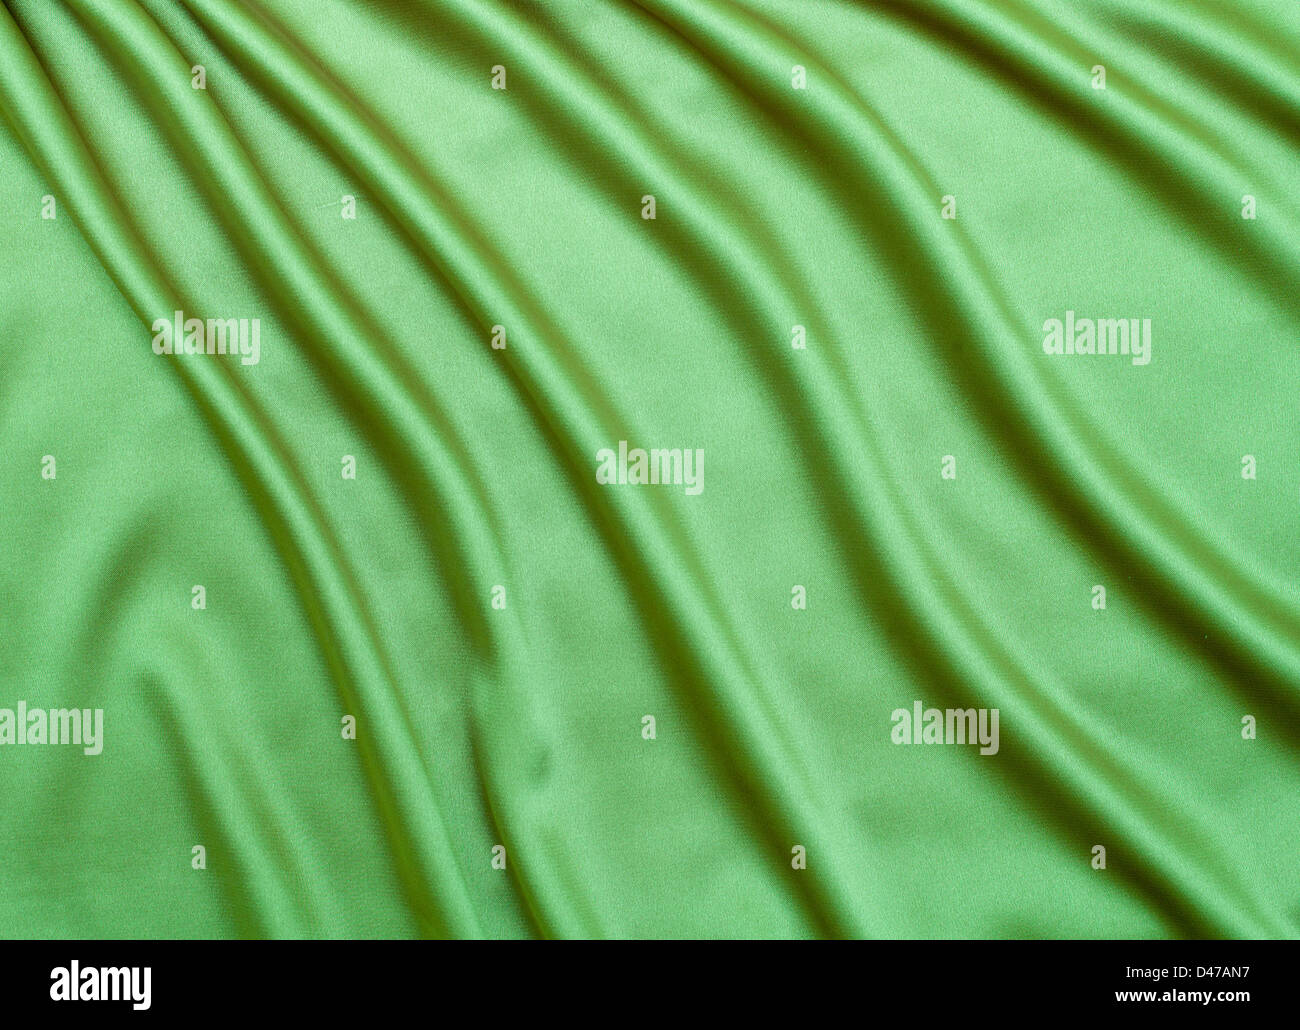 green satin or silk fabric background Stock Photo